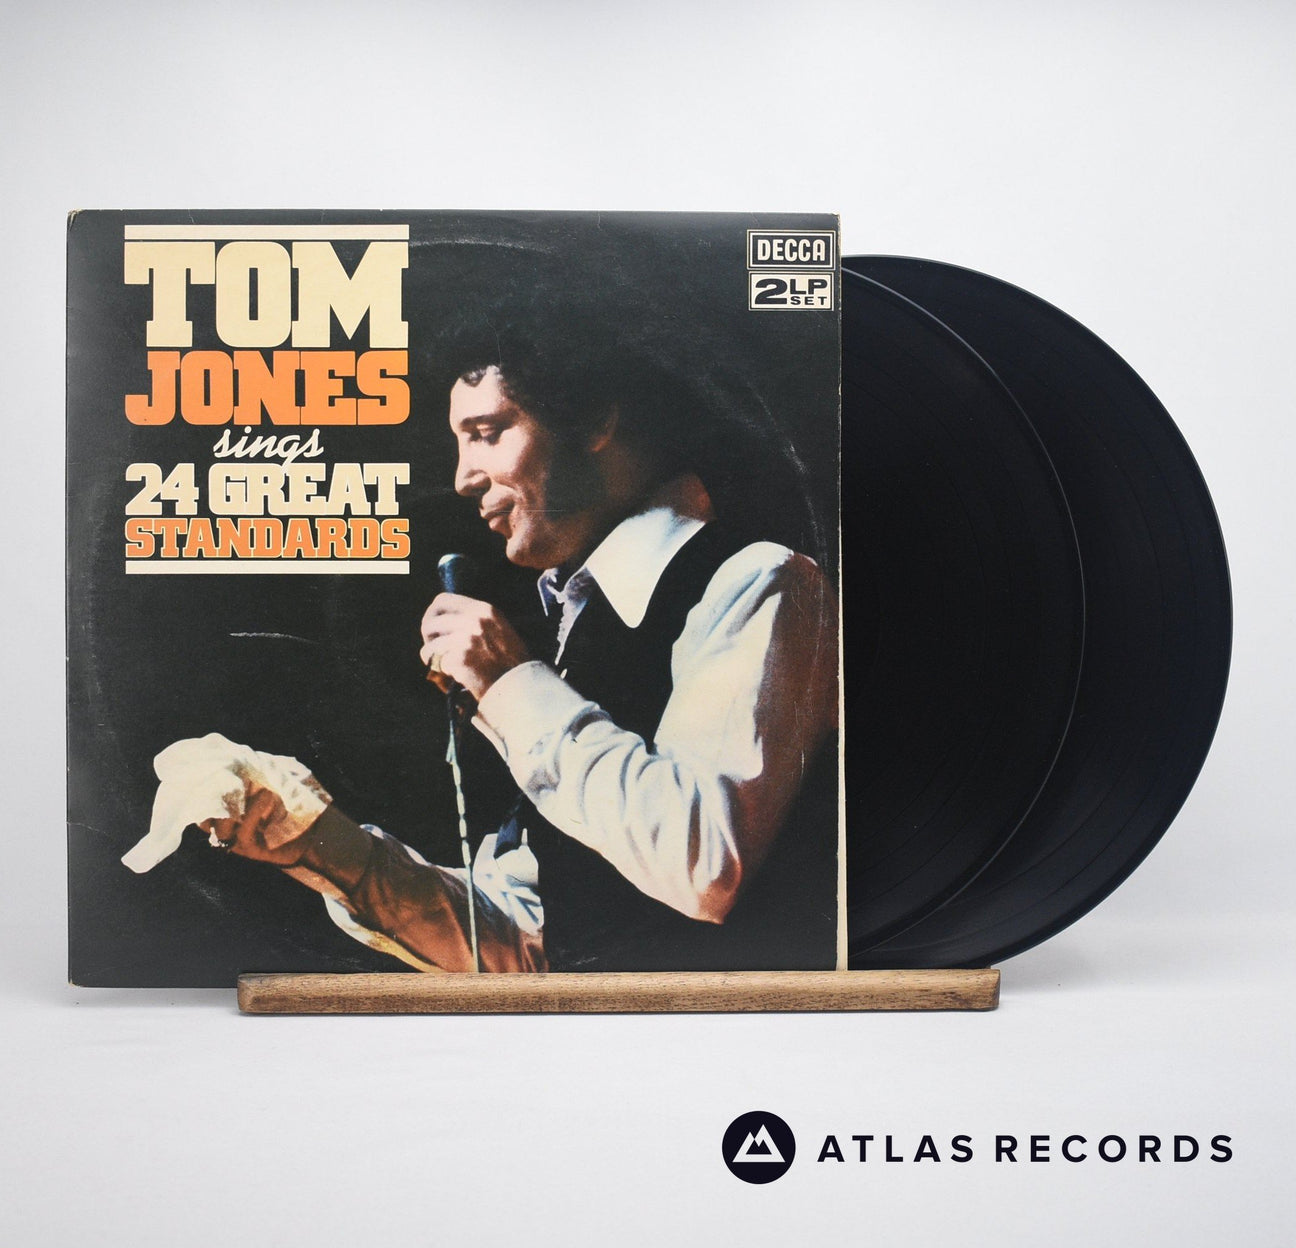 Tom Jones Tom Jones Sings 24 Great Standards Double LP Vinyl Record - Front Cover & Record